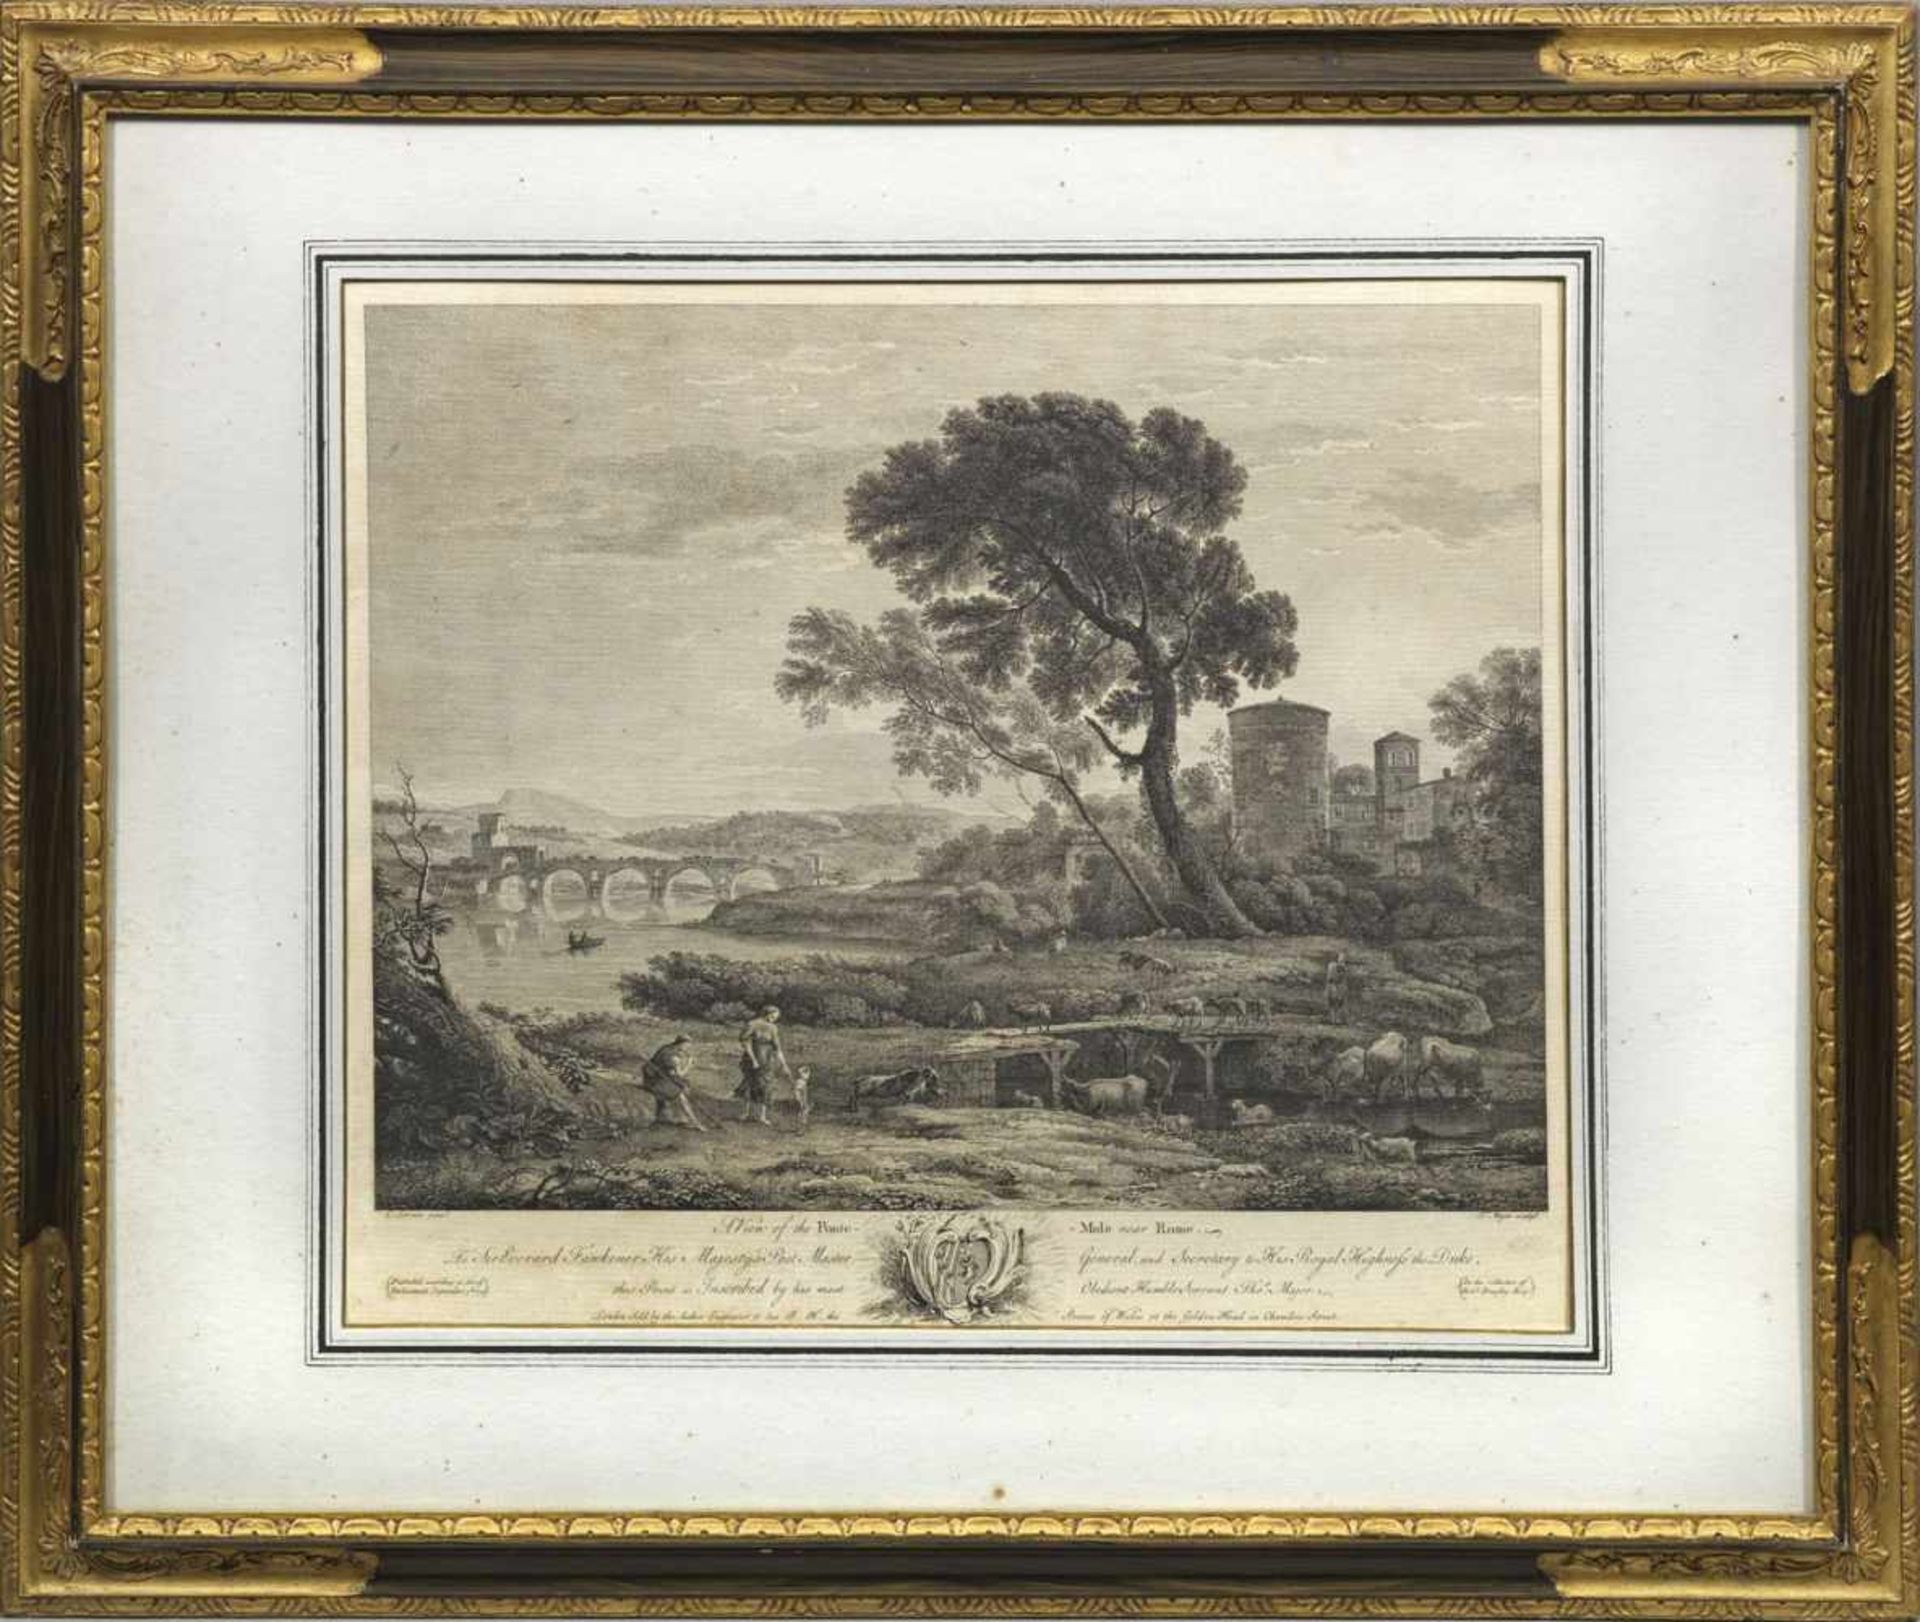 Thomas Major(1714/20 - 1799 London)"A View of the Ponte-Mole" near "Rome" (eine Ansicht der Ponte